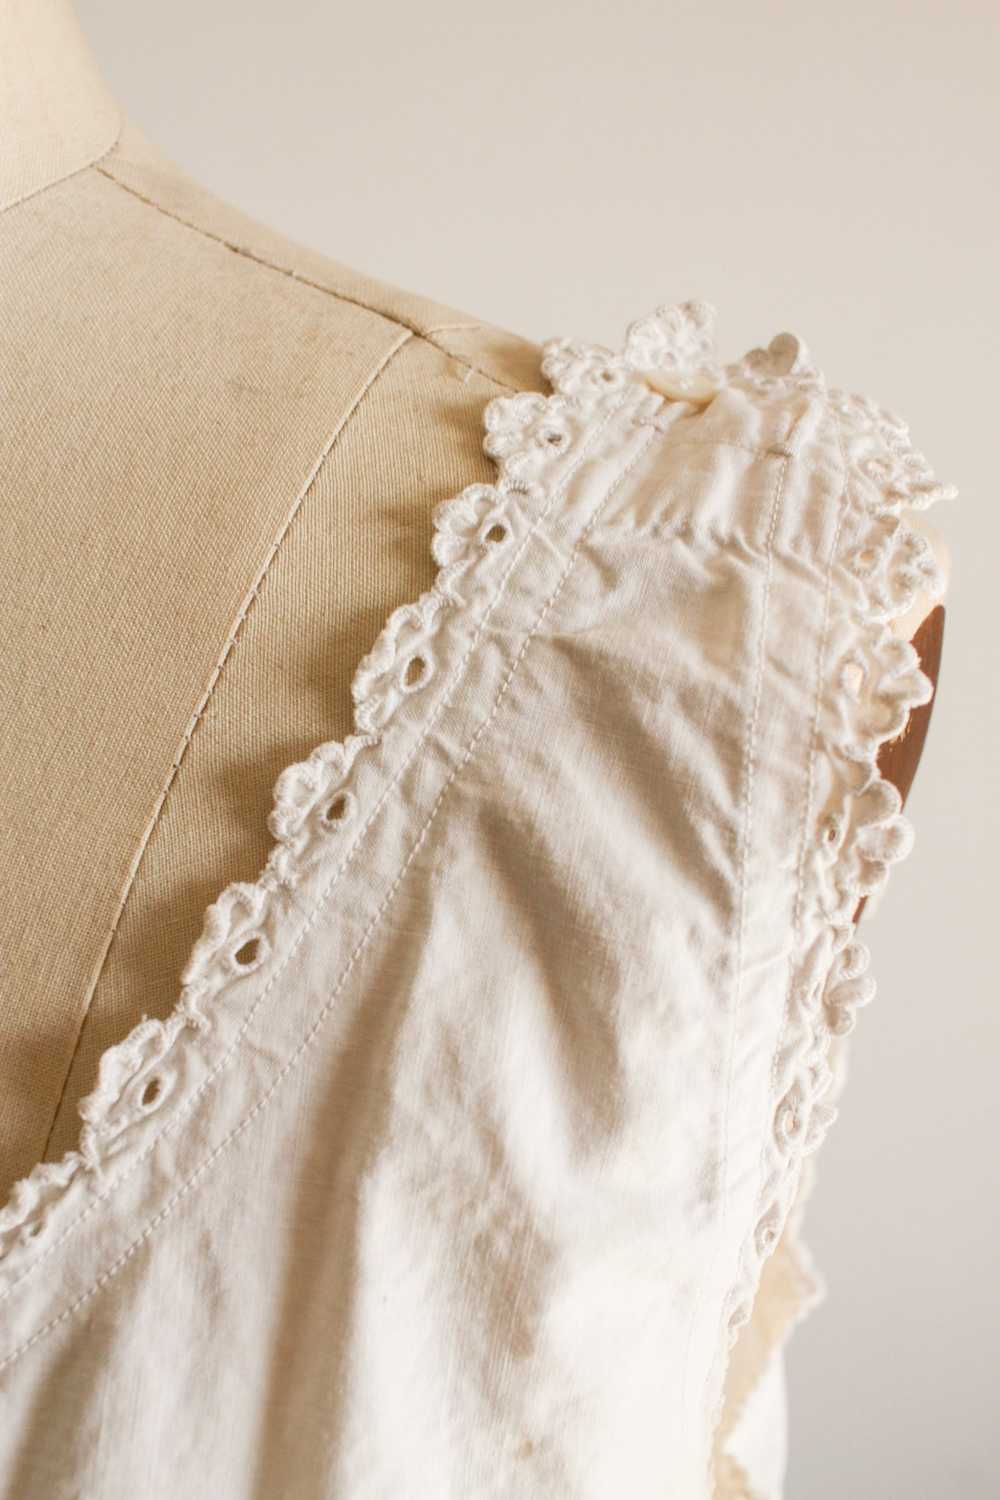 Victorian White Cotton Rosette Night Dress - image 7